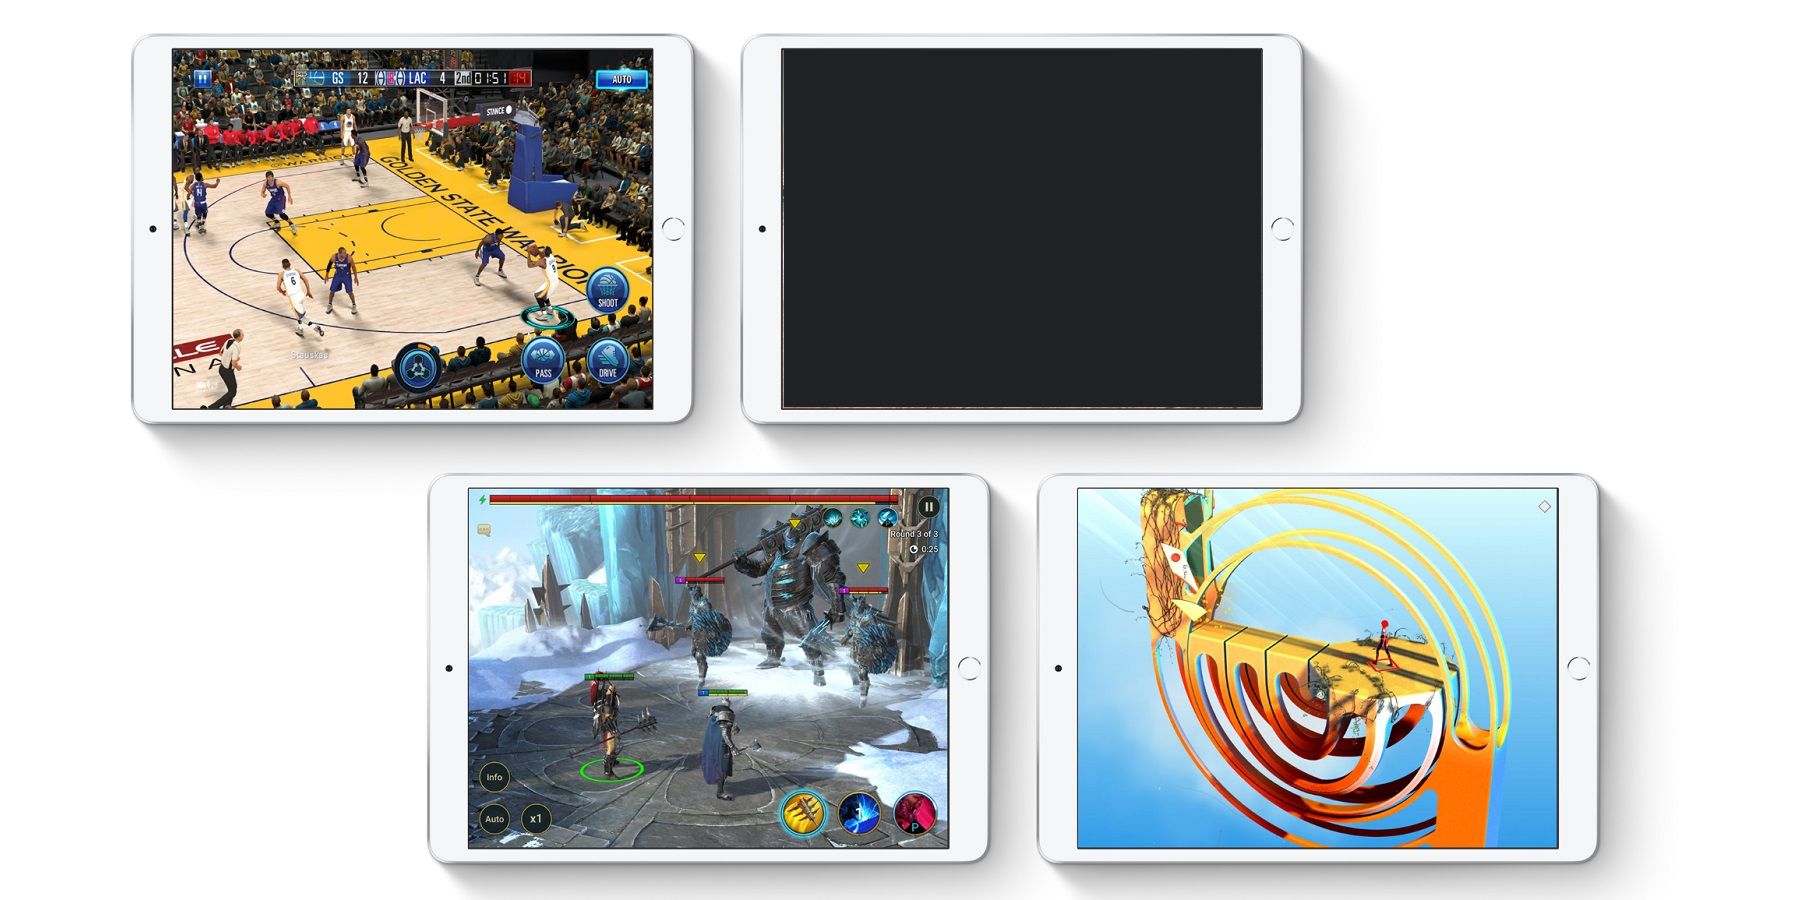 Apple offers free repair for third-generation iPad Air models